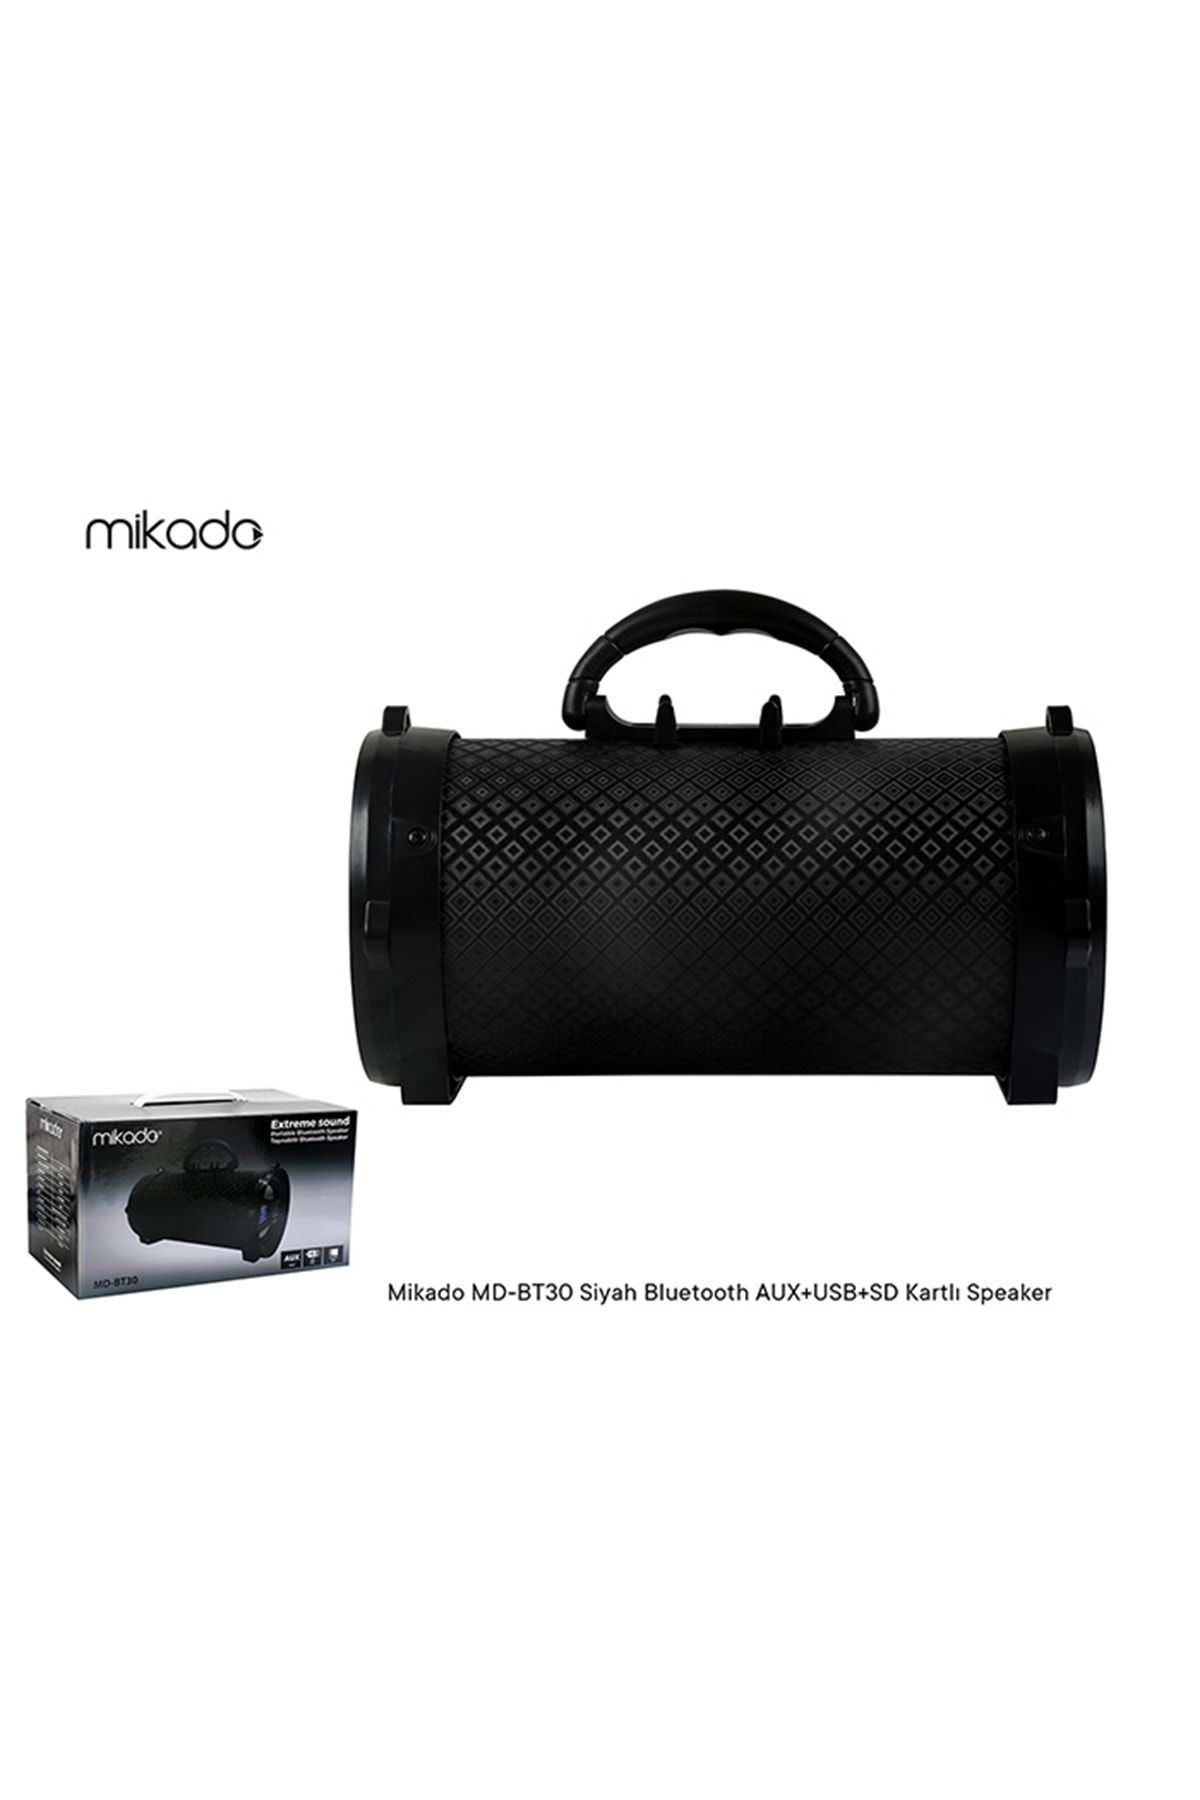 Mikado Md-bt30 Siyah Bluetooth Aux+usb+sd Kartlı Speaker